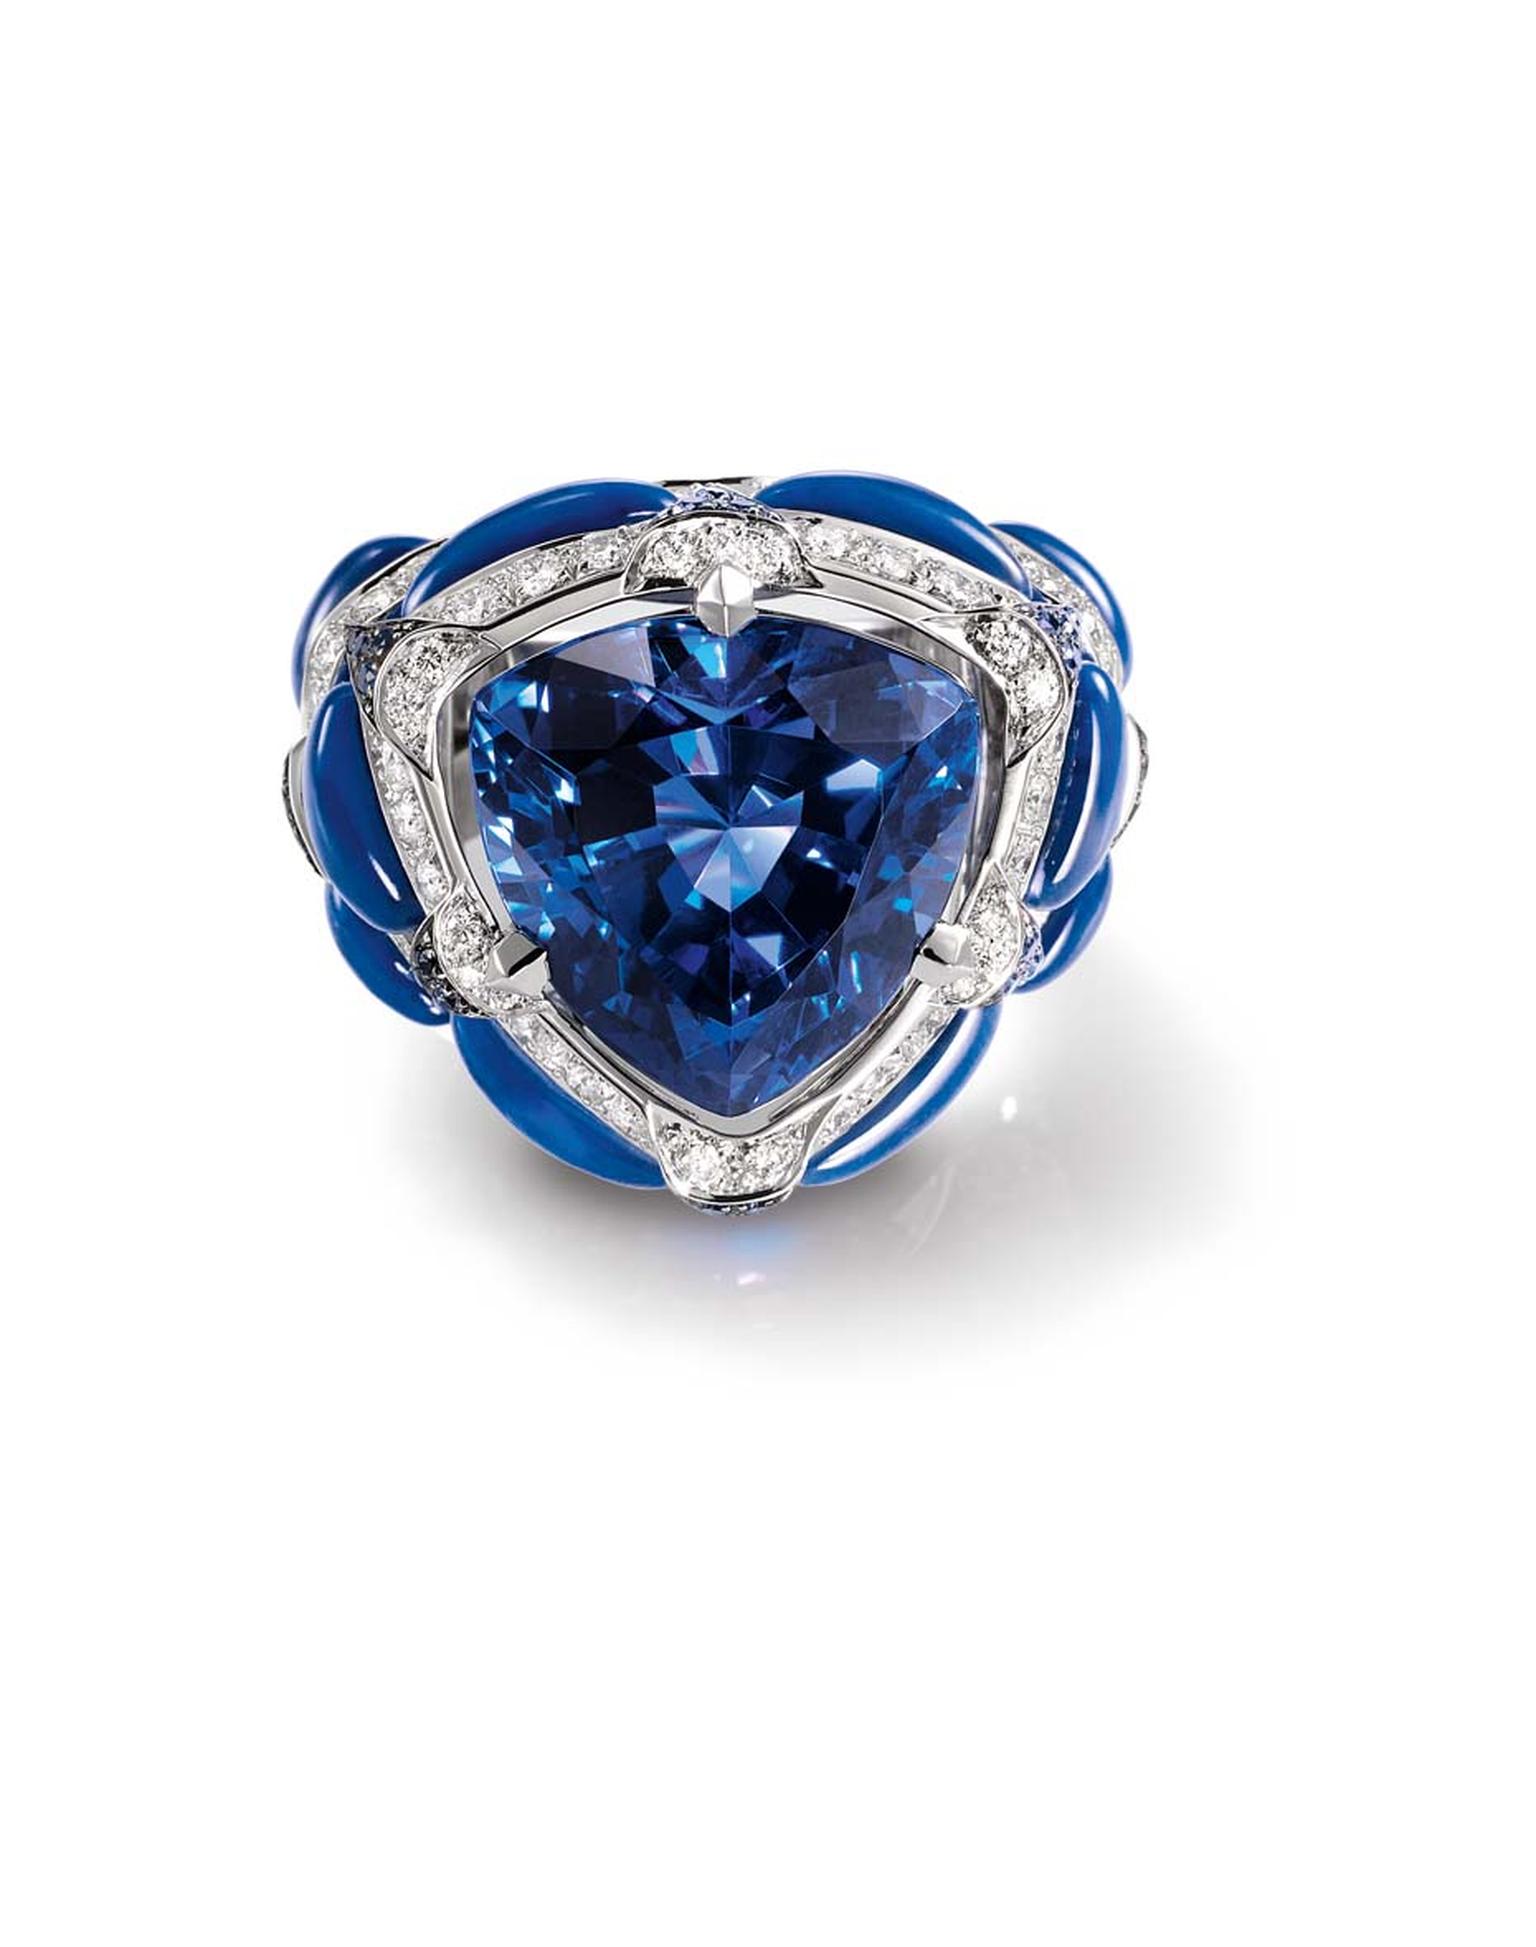 Chaumet Lumières d'Eau collection ring featuring diamonds, tanzanite and sculpted lapis lazuli.